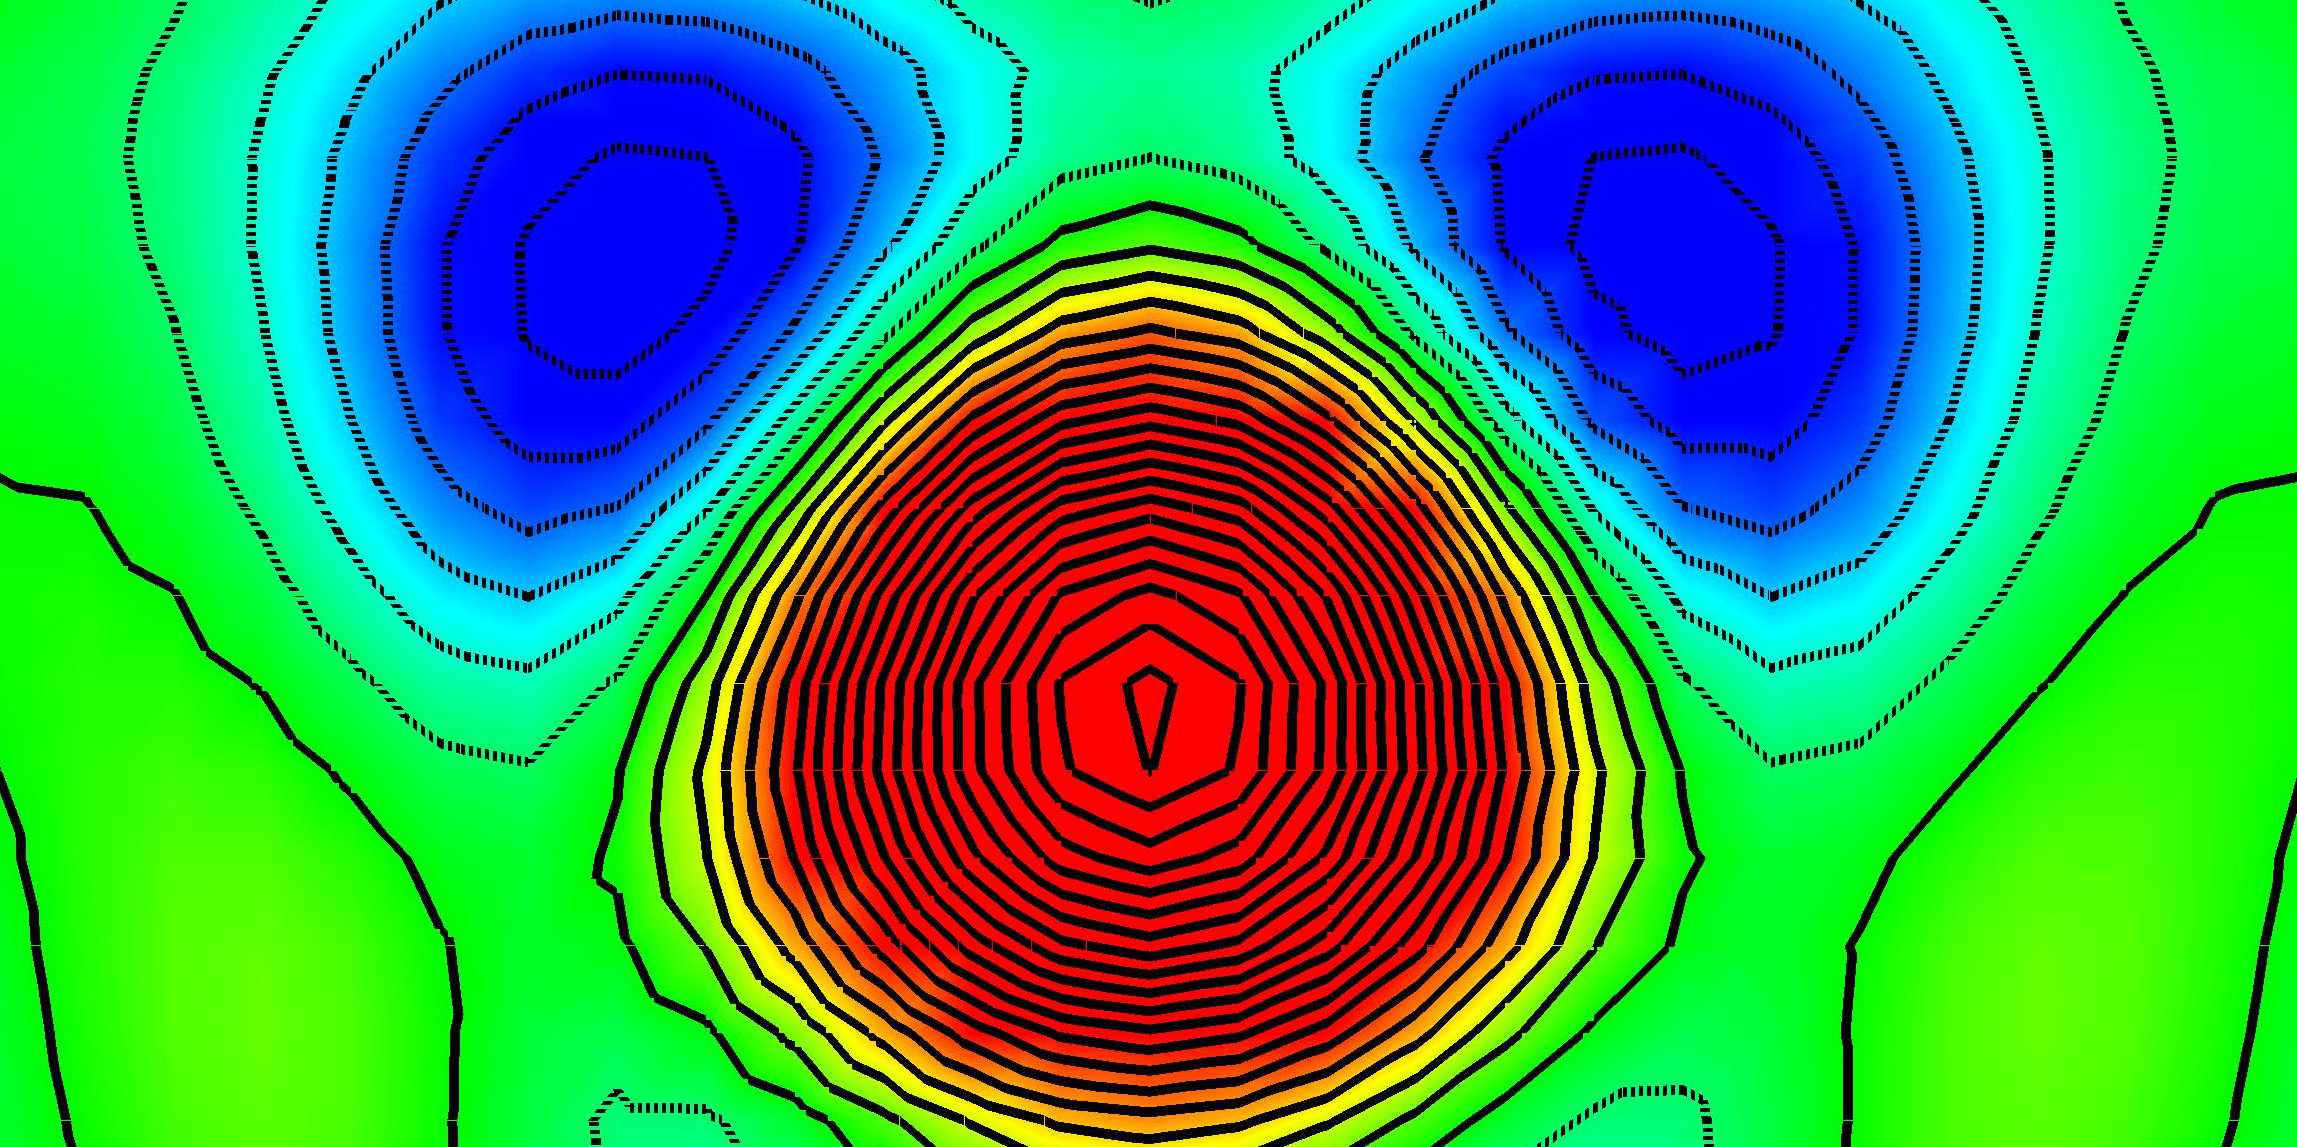 Enlarged view: nucleus density